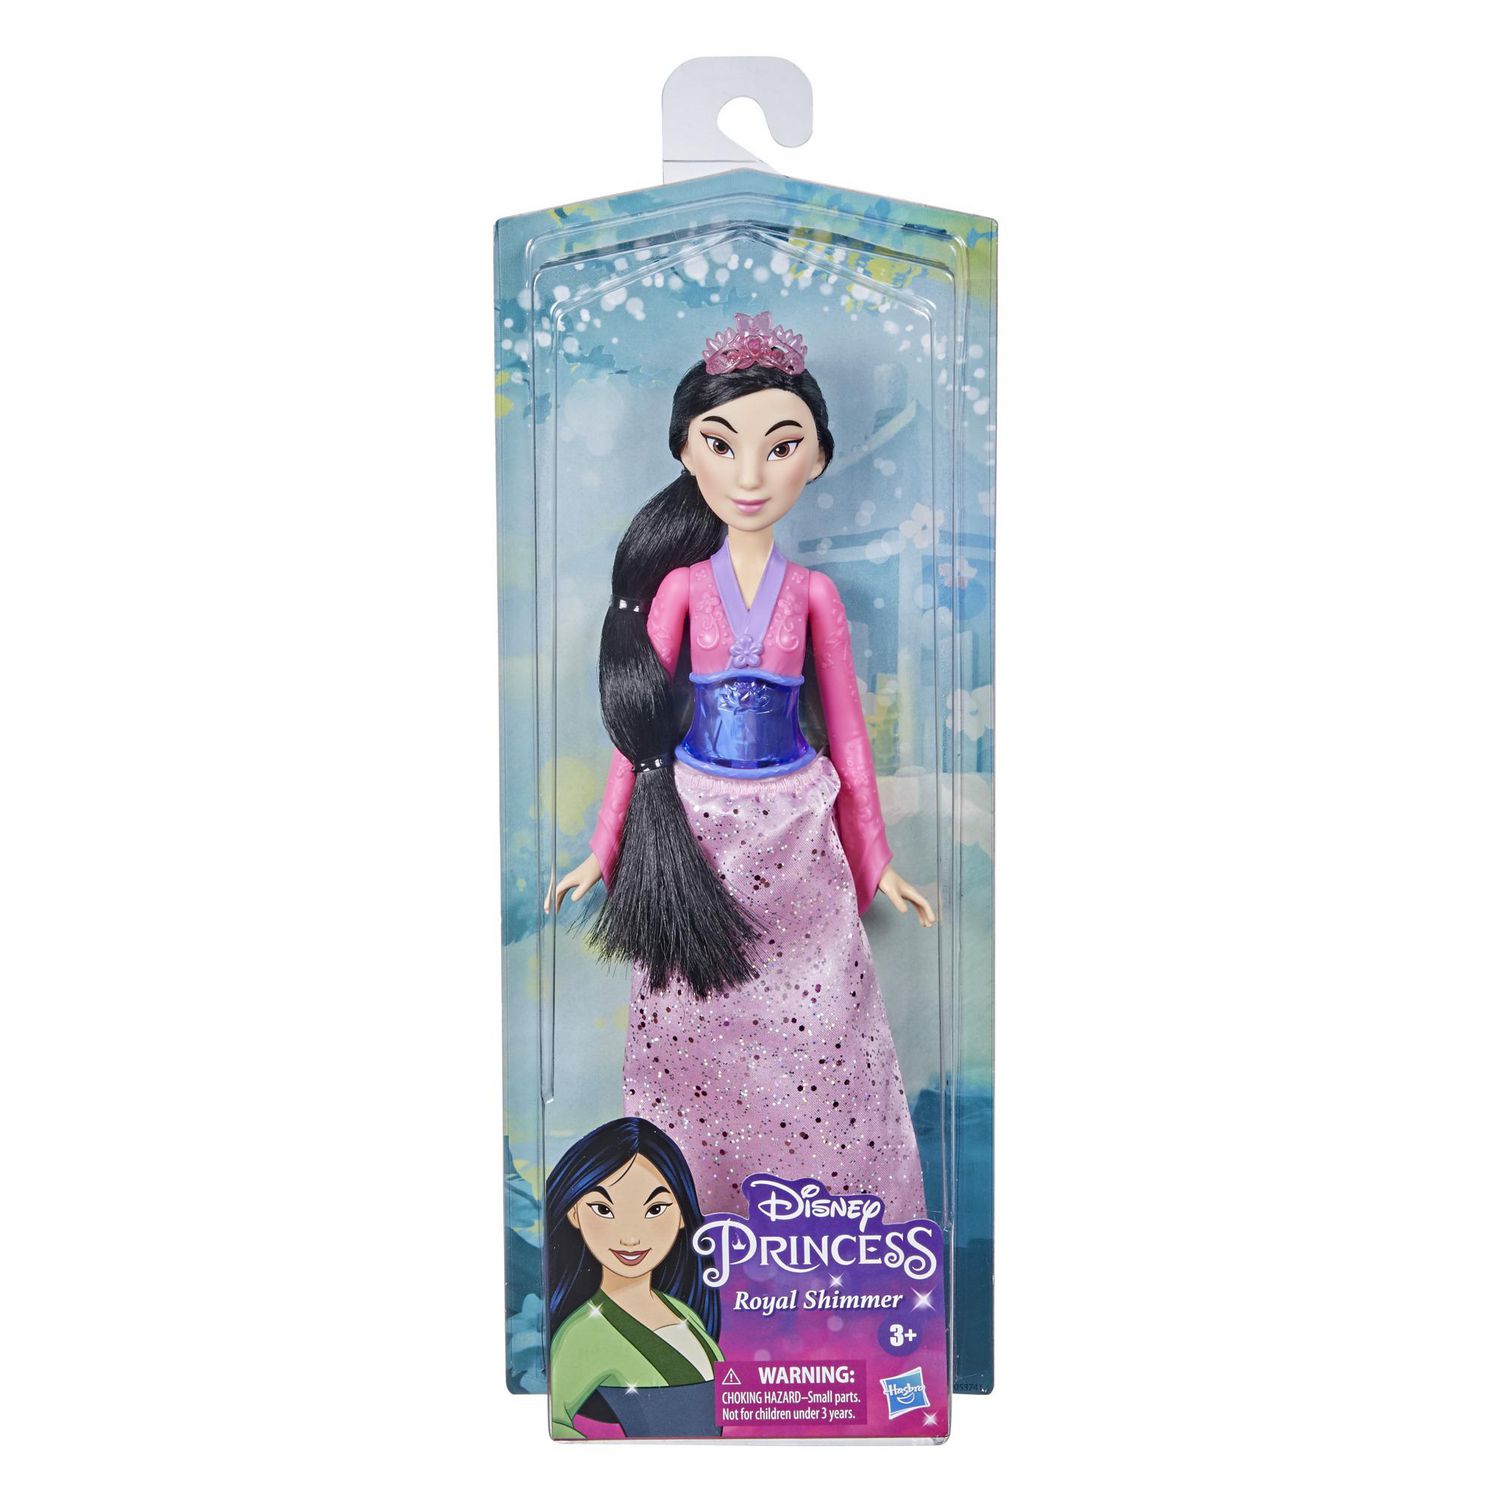 Disney Princess Royal Shimmer Mulan Doll with Skirt and Accessories